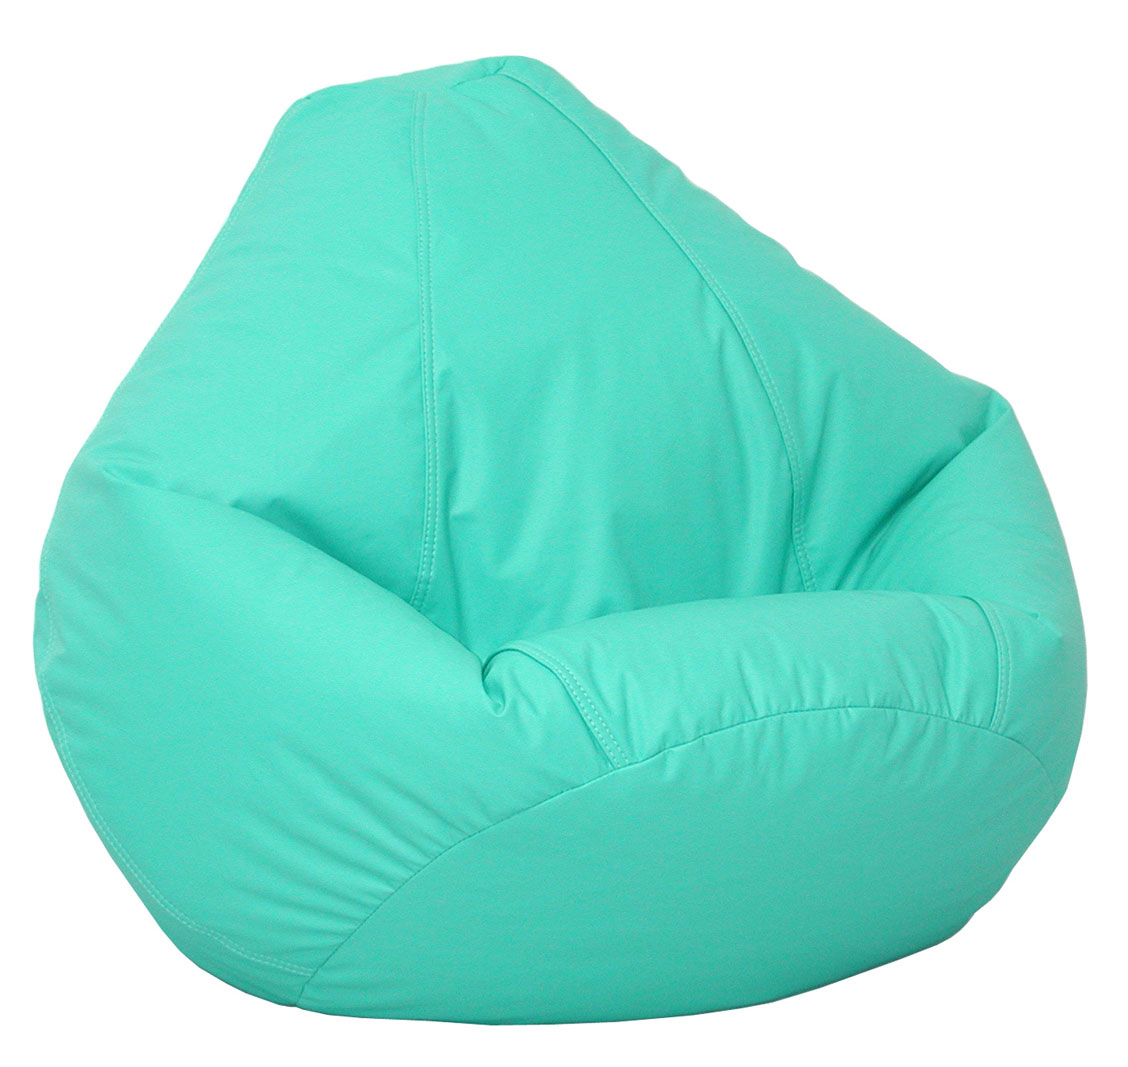 Aqua Lifestyle Vinyl Bean Bag Chair - Elite 30-1021-329